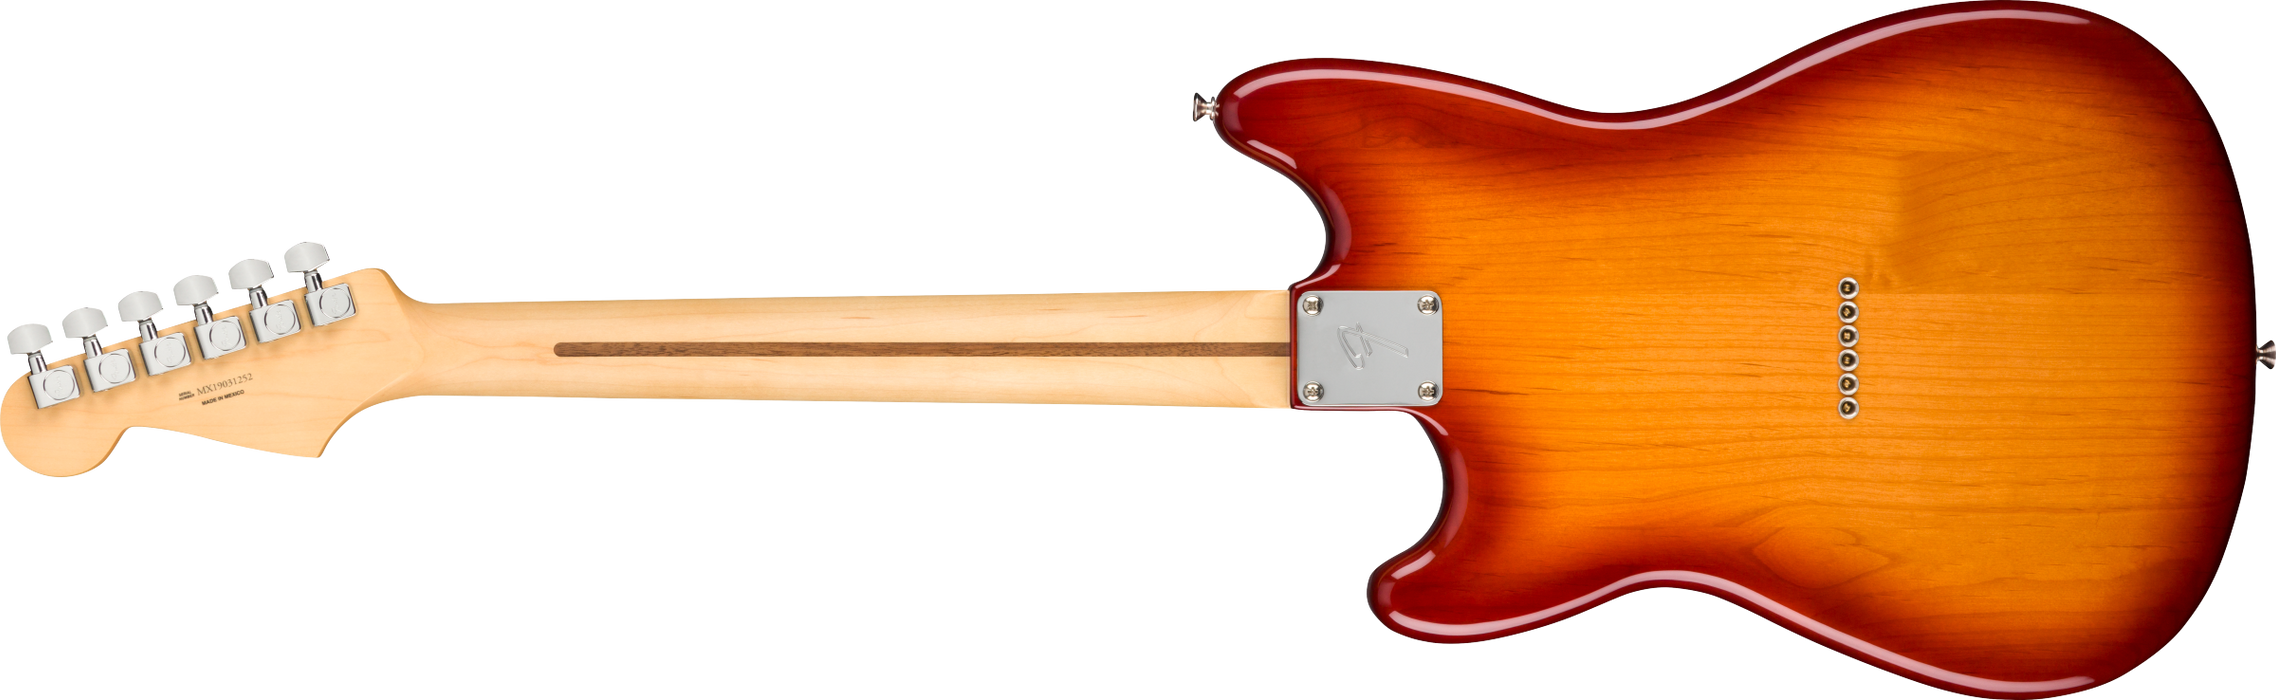 Fender Player Duo-Sonic HS Maple Fingerboard Sienna Sunburst Electric Guitar